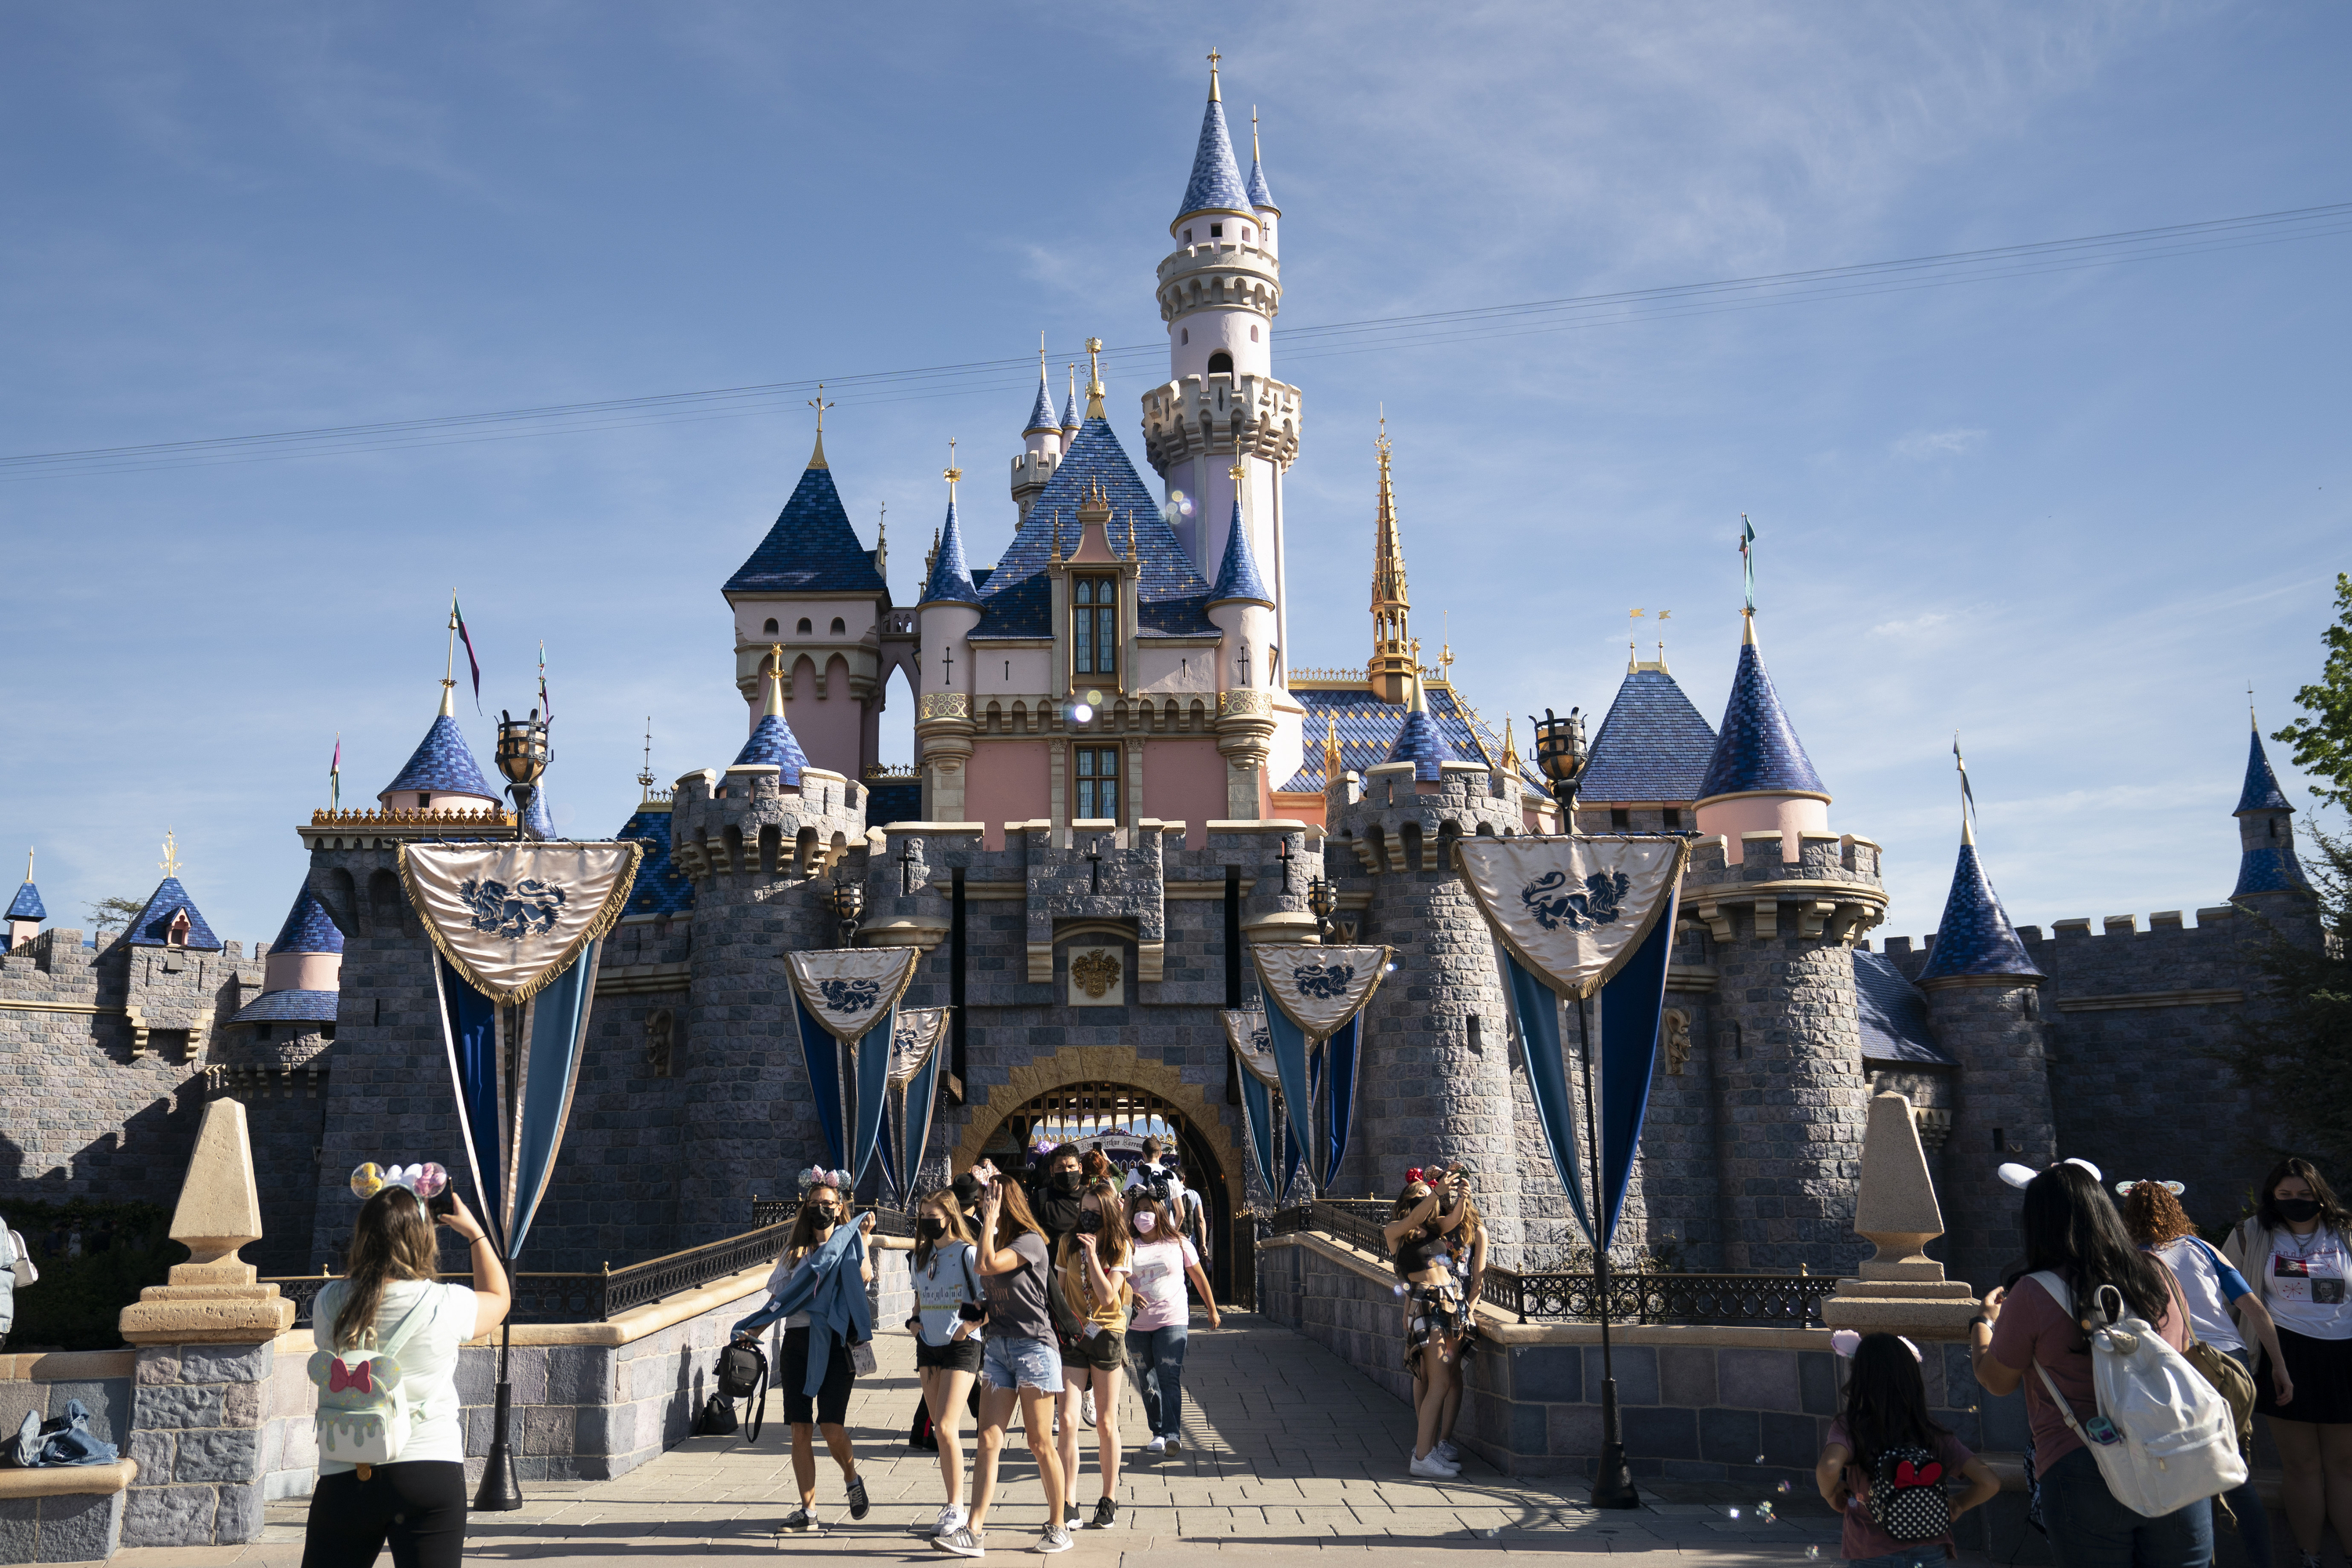 Парк развлечений диснейленд. Анахайм Калифорния Диснейленд. Диснейленд США В Анахайме. Парк Диснейленд, Анахайм, Калифорния (Disneyland Park). Sleeping Beauty Castle Диснейленд.